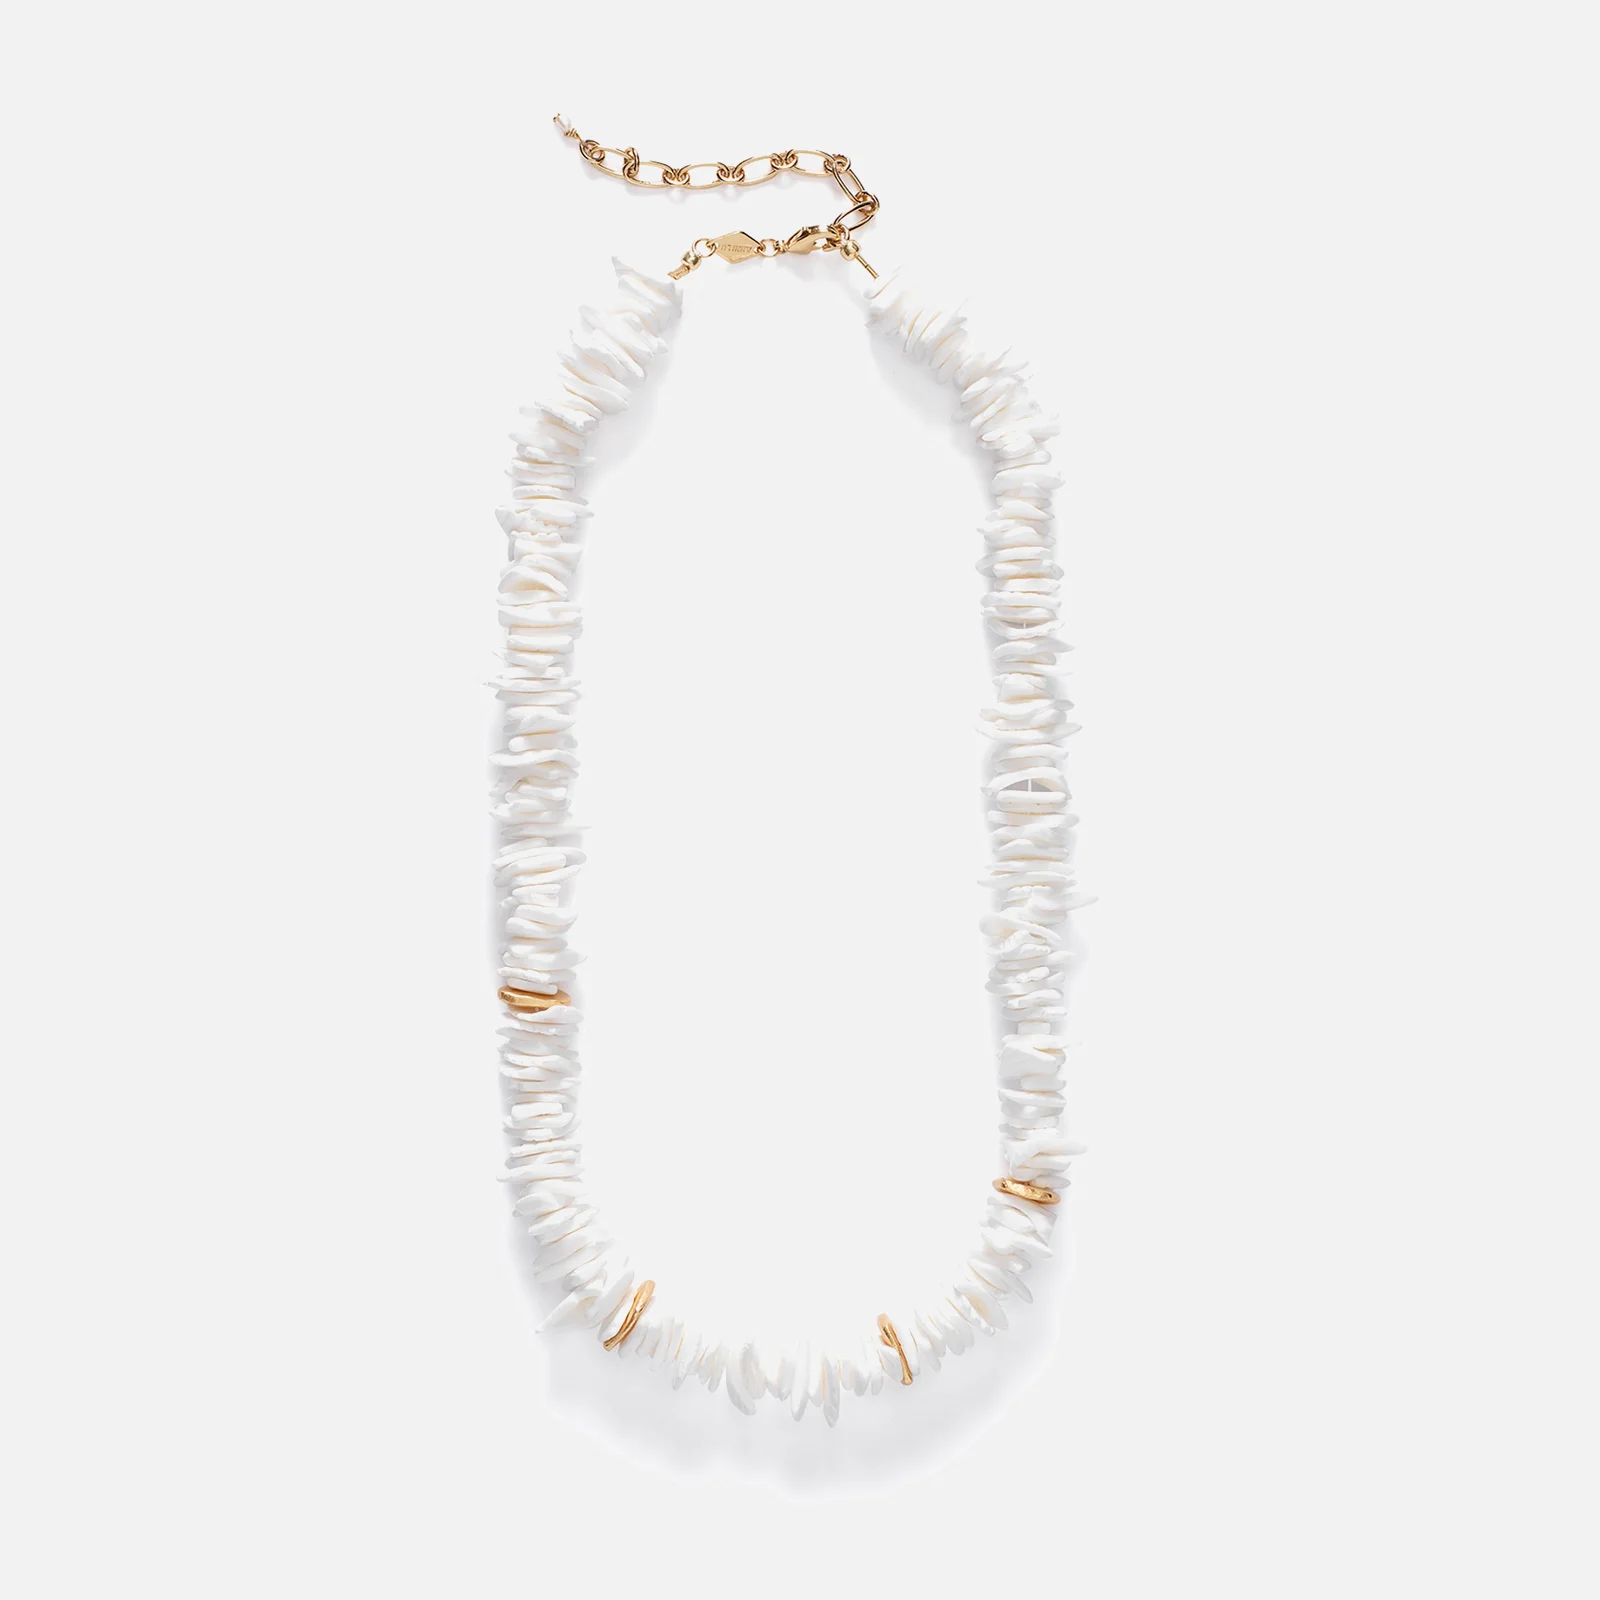 Anni Lu Puka Shell and Glass Bead Necklace Image 1